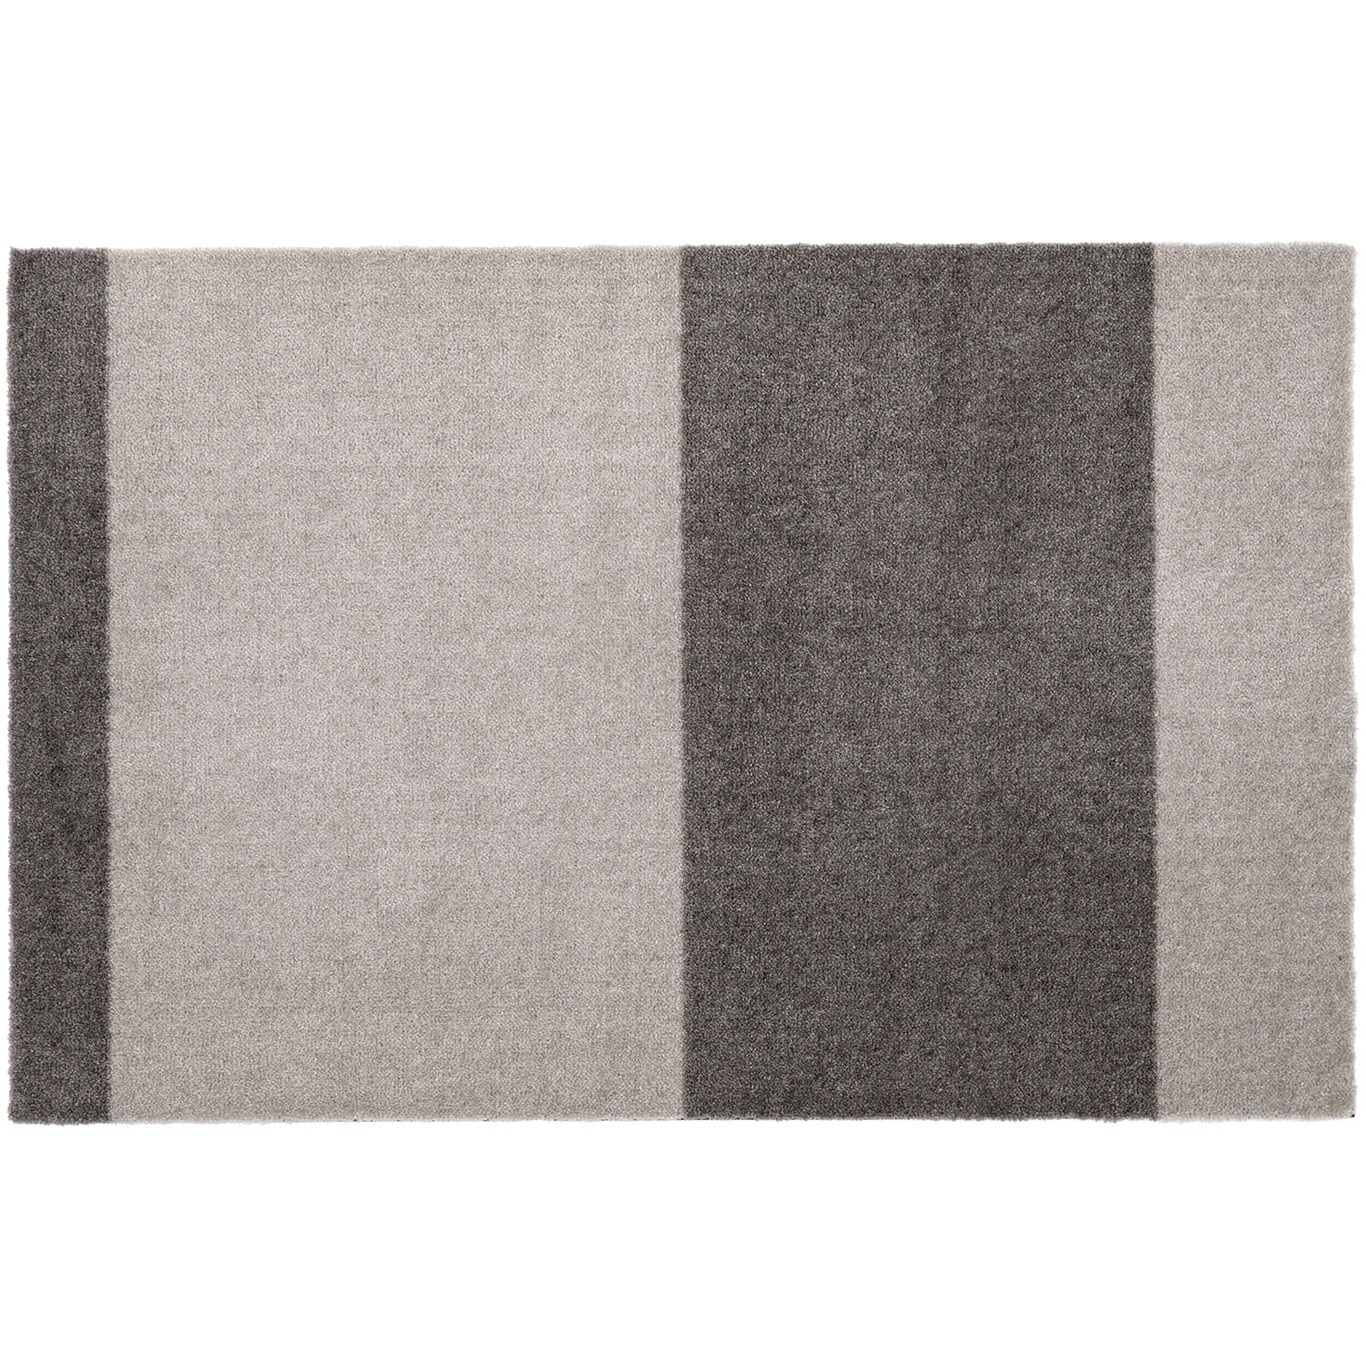 Stripes Rug Steel Grey / Light Grey, 60x90 cm